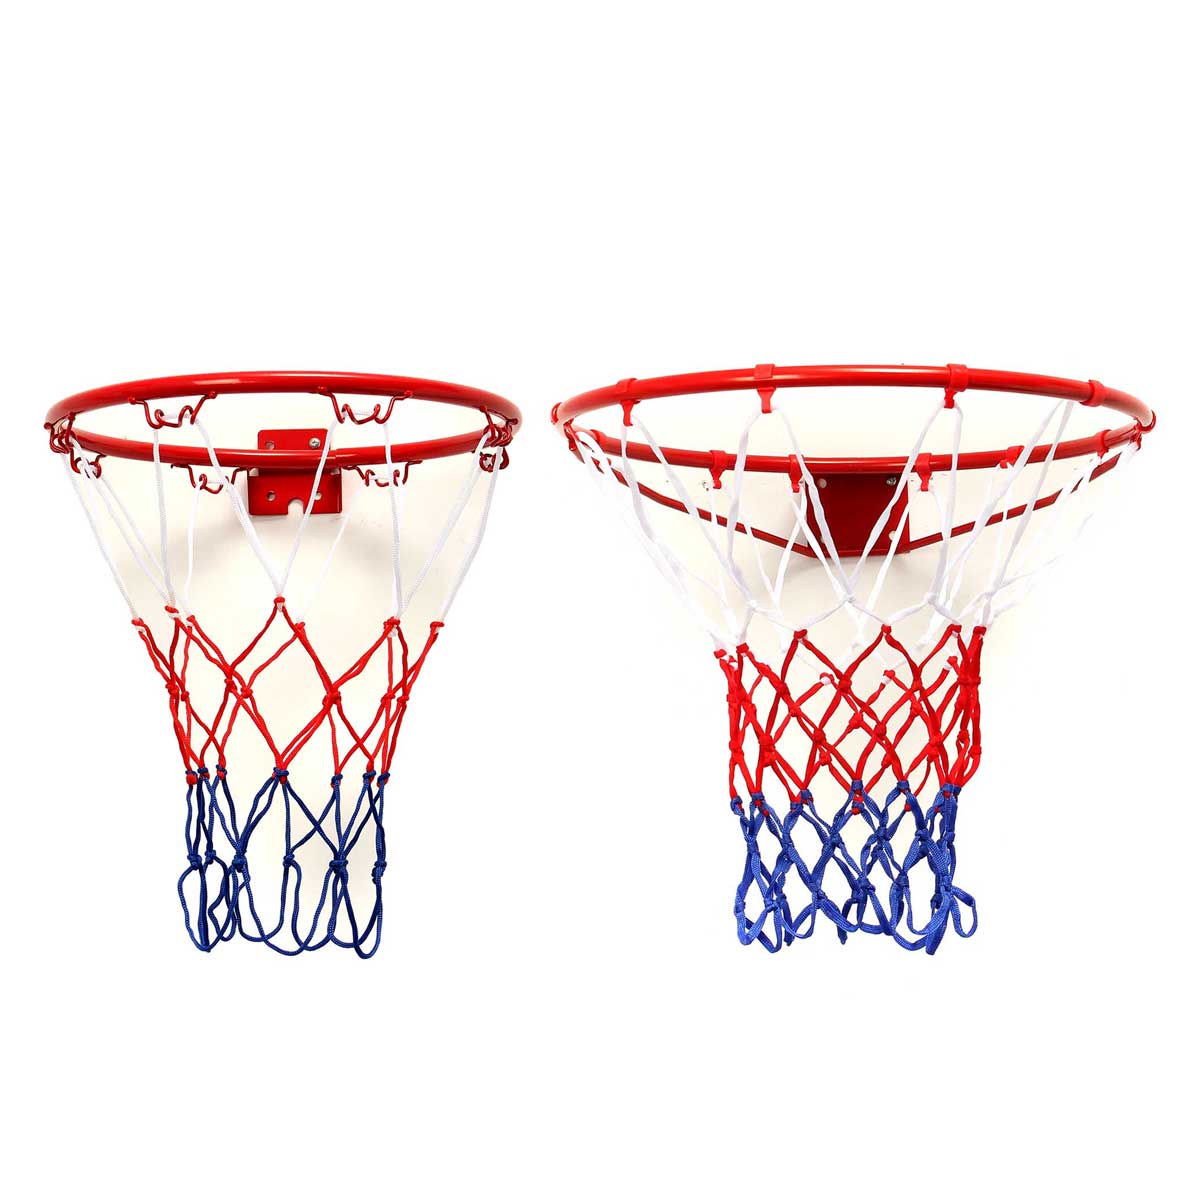 Wall-Mounted-Hanging-Basketball-Goal-Hoop-Rim-Metal-Netting-1040840-1